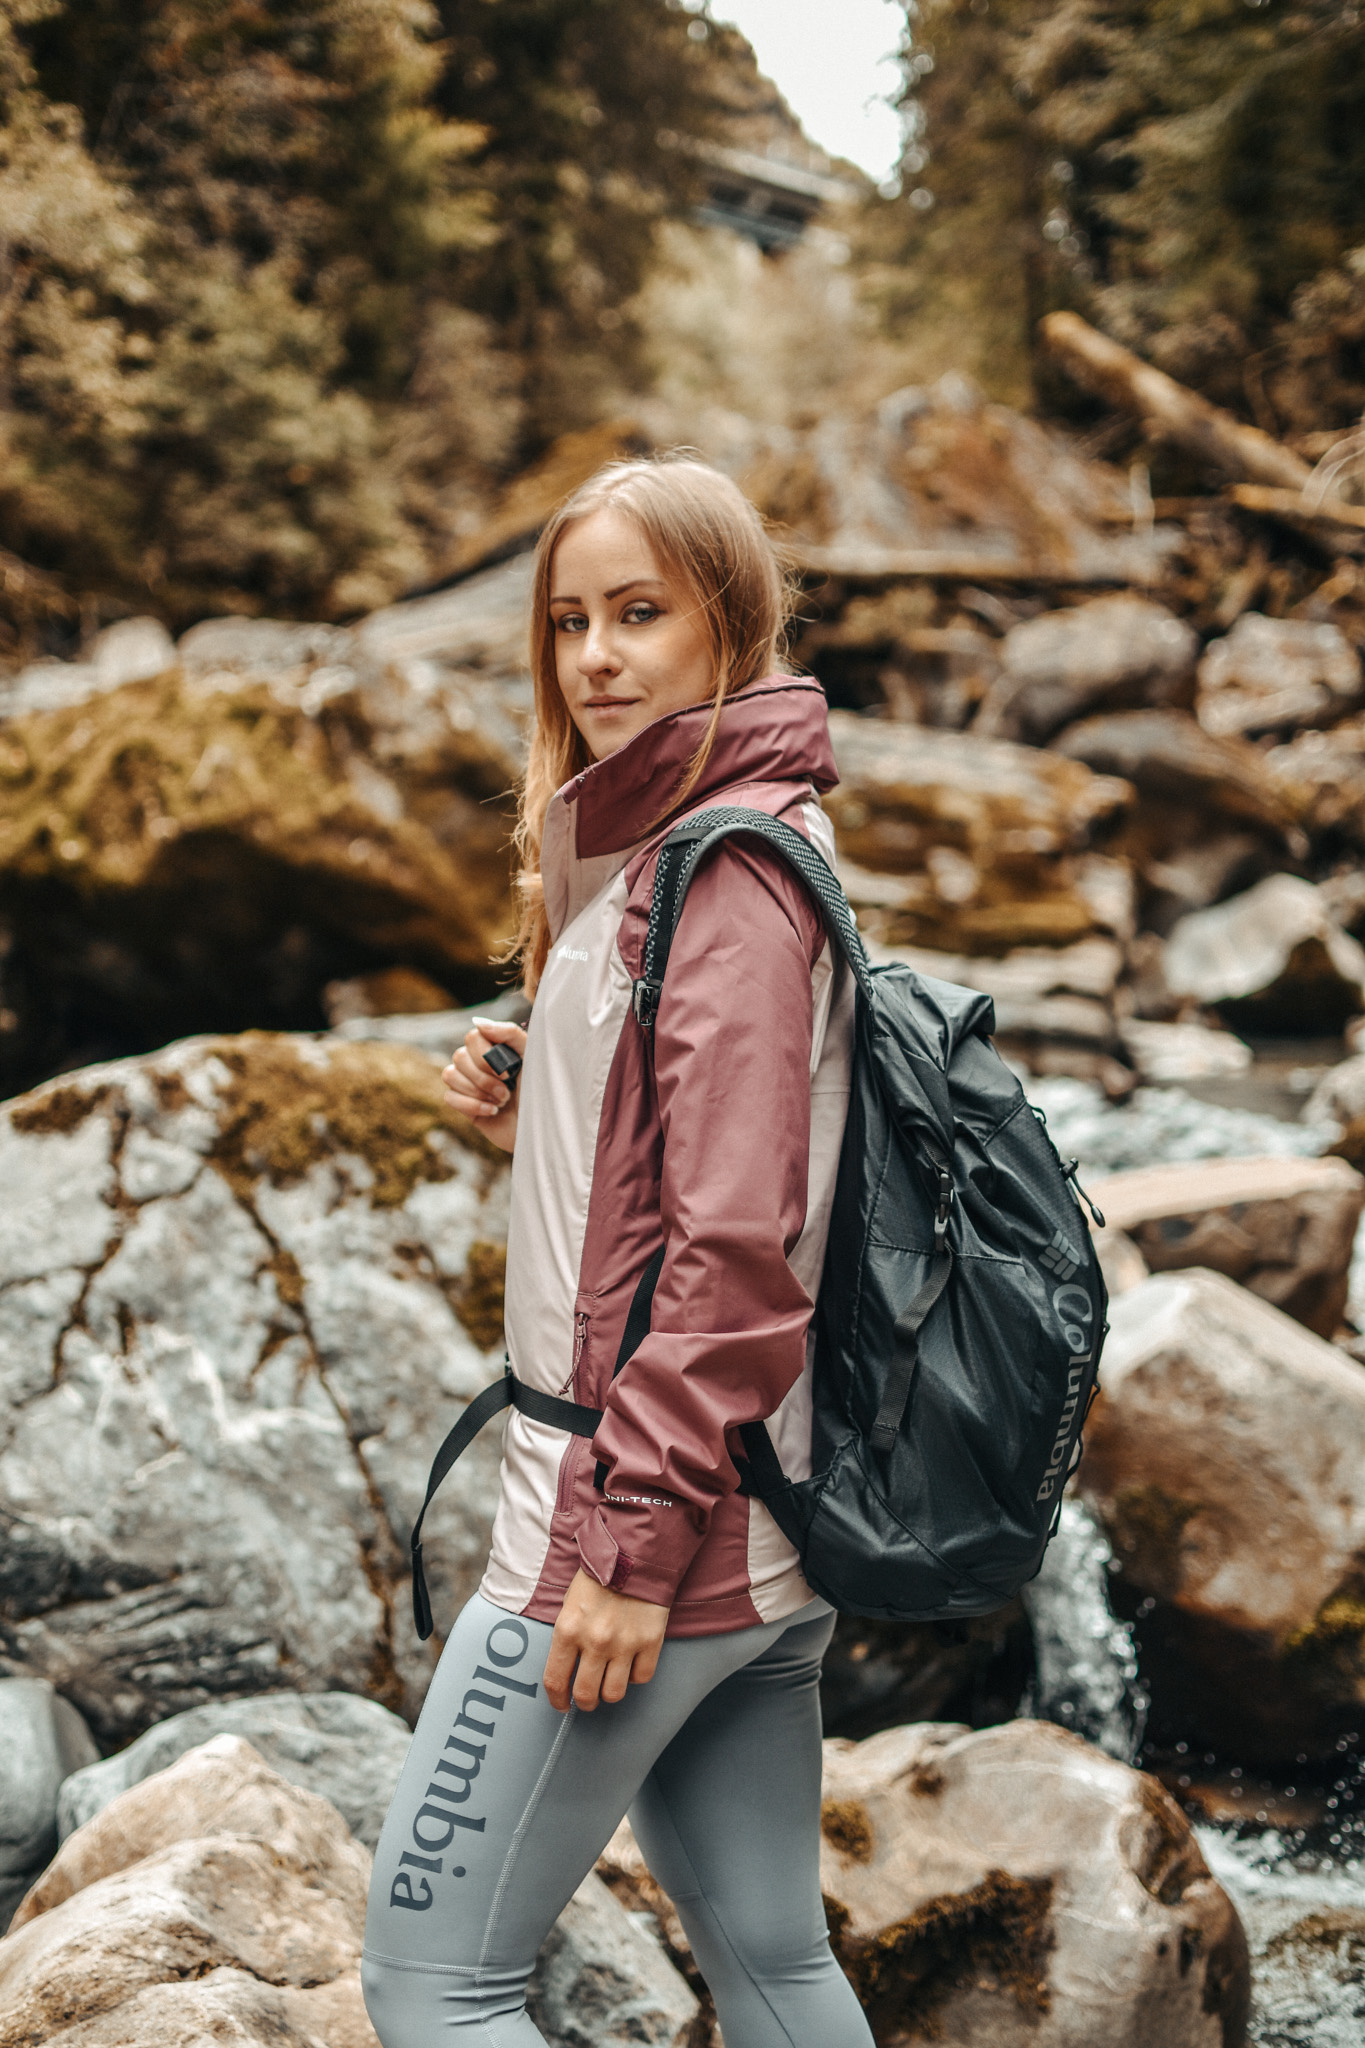 Noodlottig Kosmisch opwinding Hiking in autumn with Columbia Sportswear | The Chic Advocate